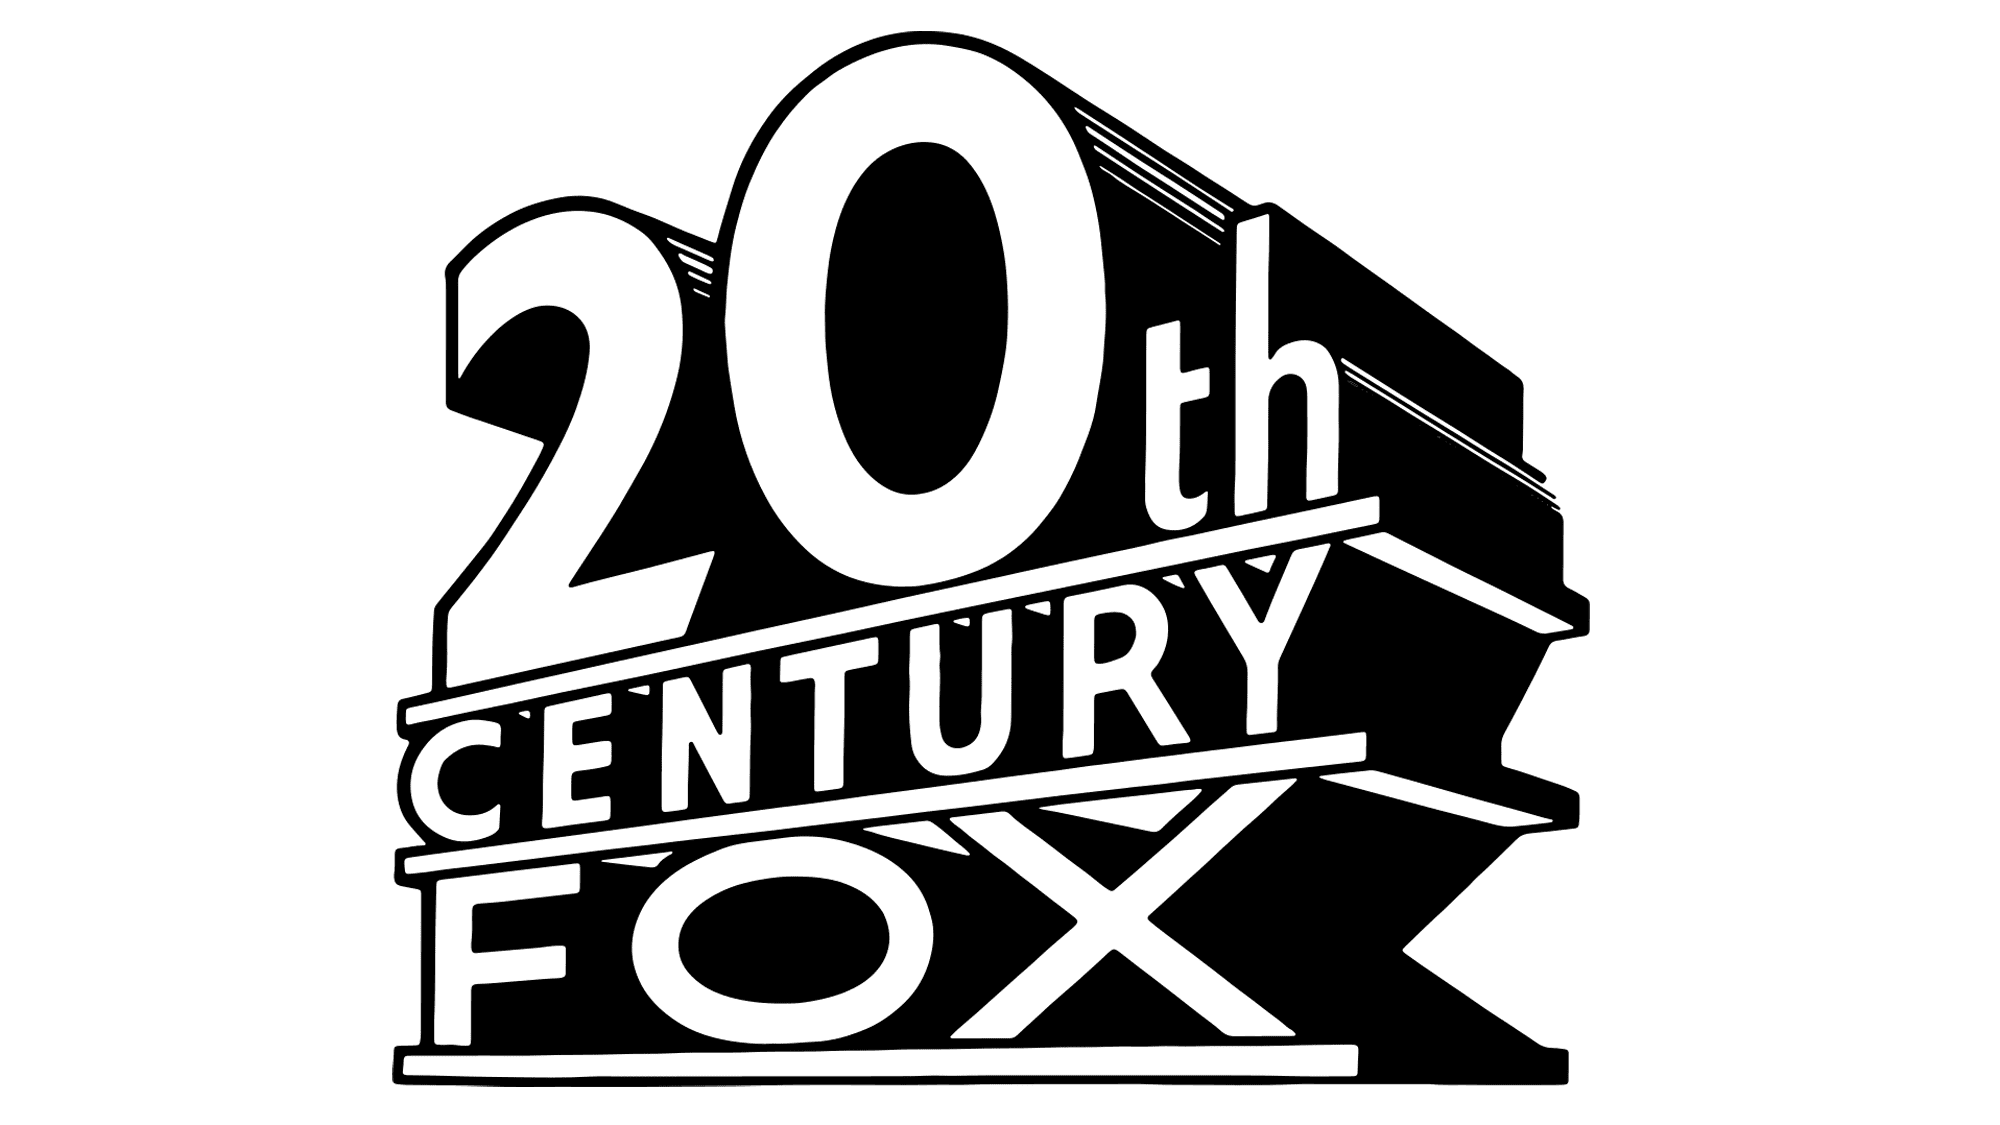 20 Century Fox logo. 20 Век Фокс 1935. 20th Century Fox 1. 20th Century Fox logo 1935. Th fox